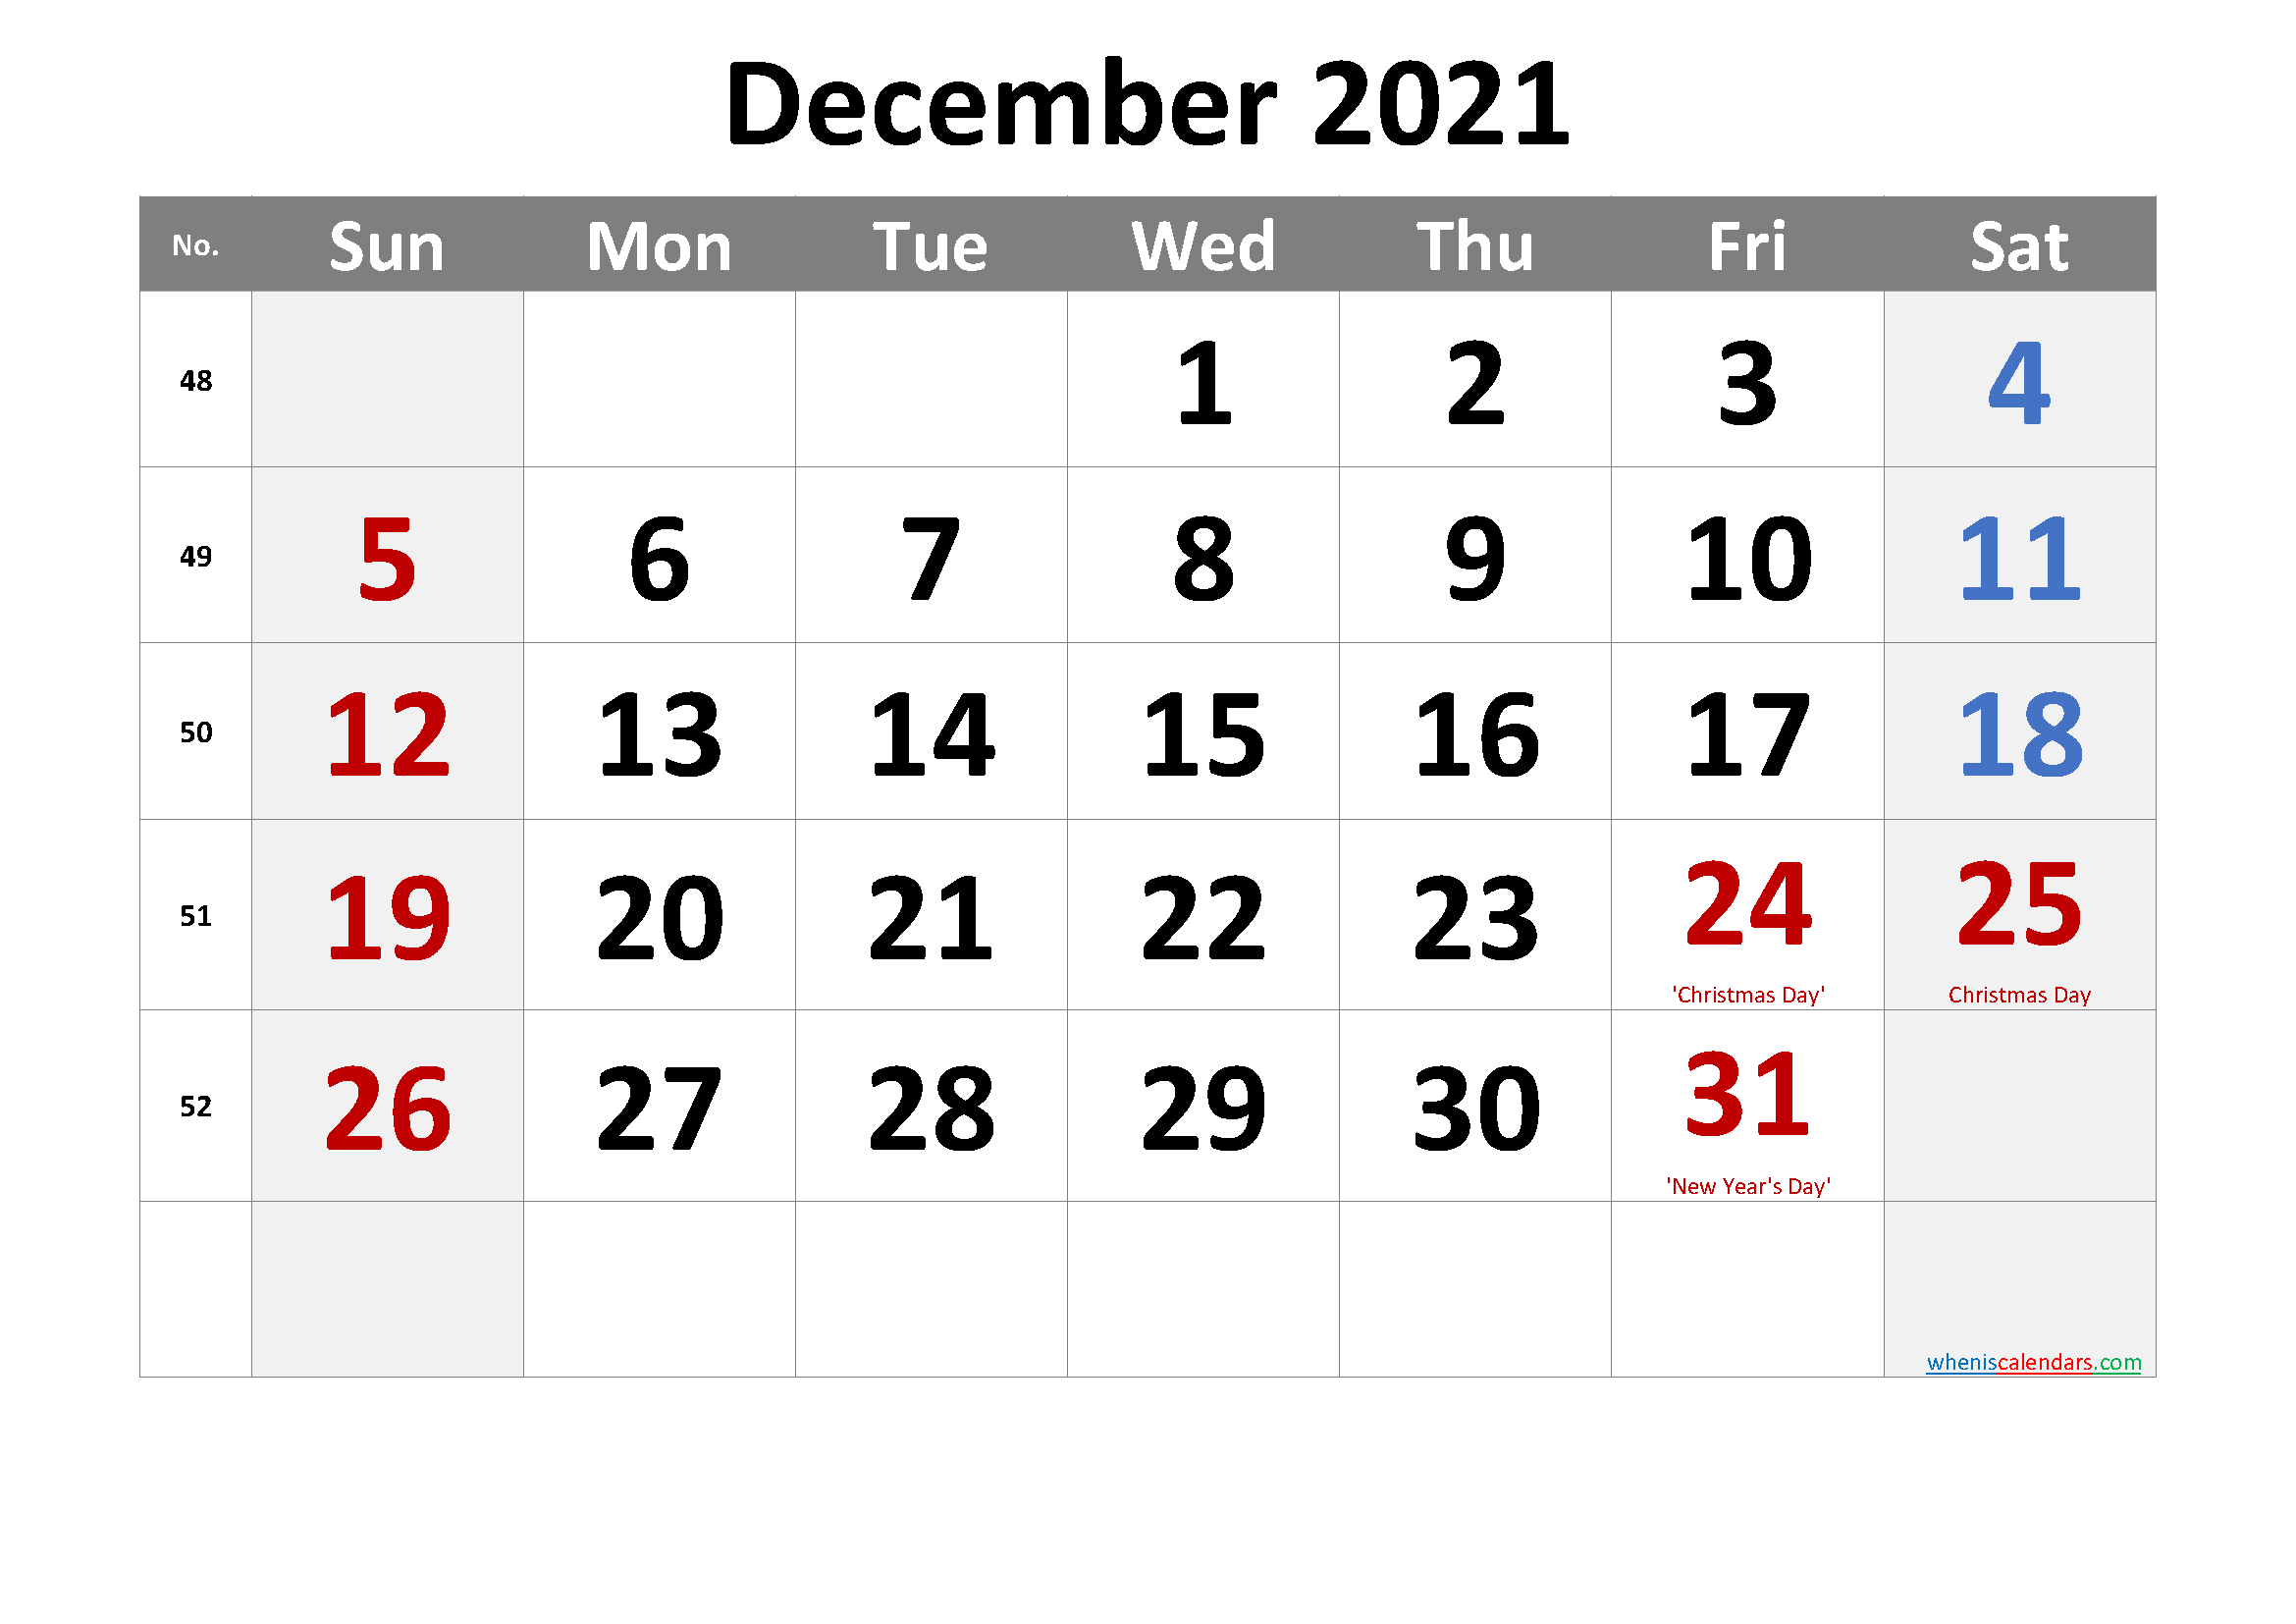 December 2021 Printable Calendar With Holidays - 6 Templates